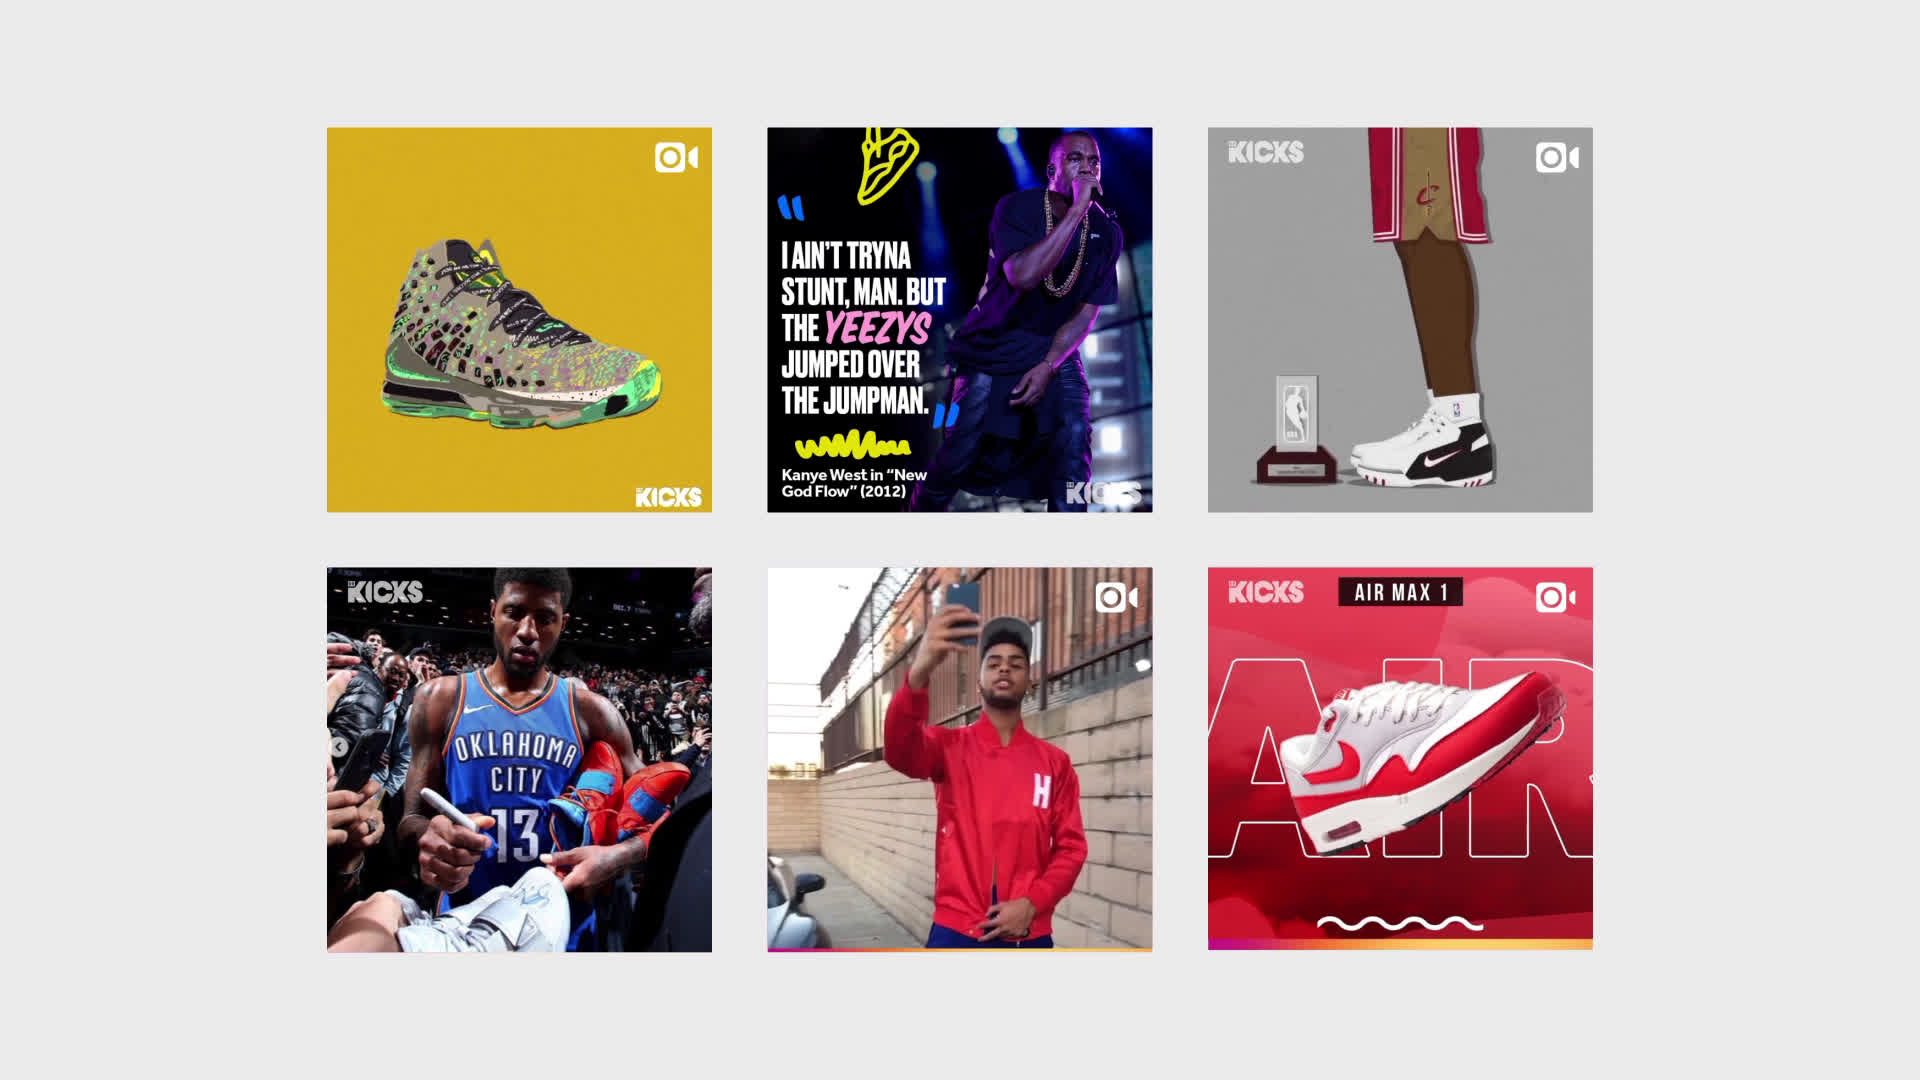 UNBOXING: Jayson Tatum Boston Celtics Nike Authentic City Edition